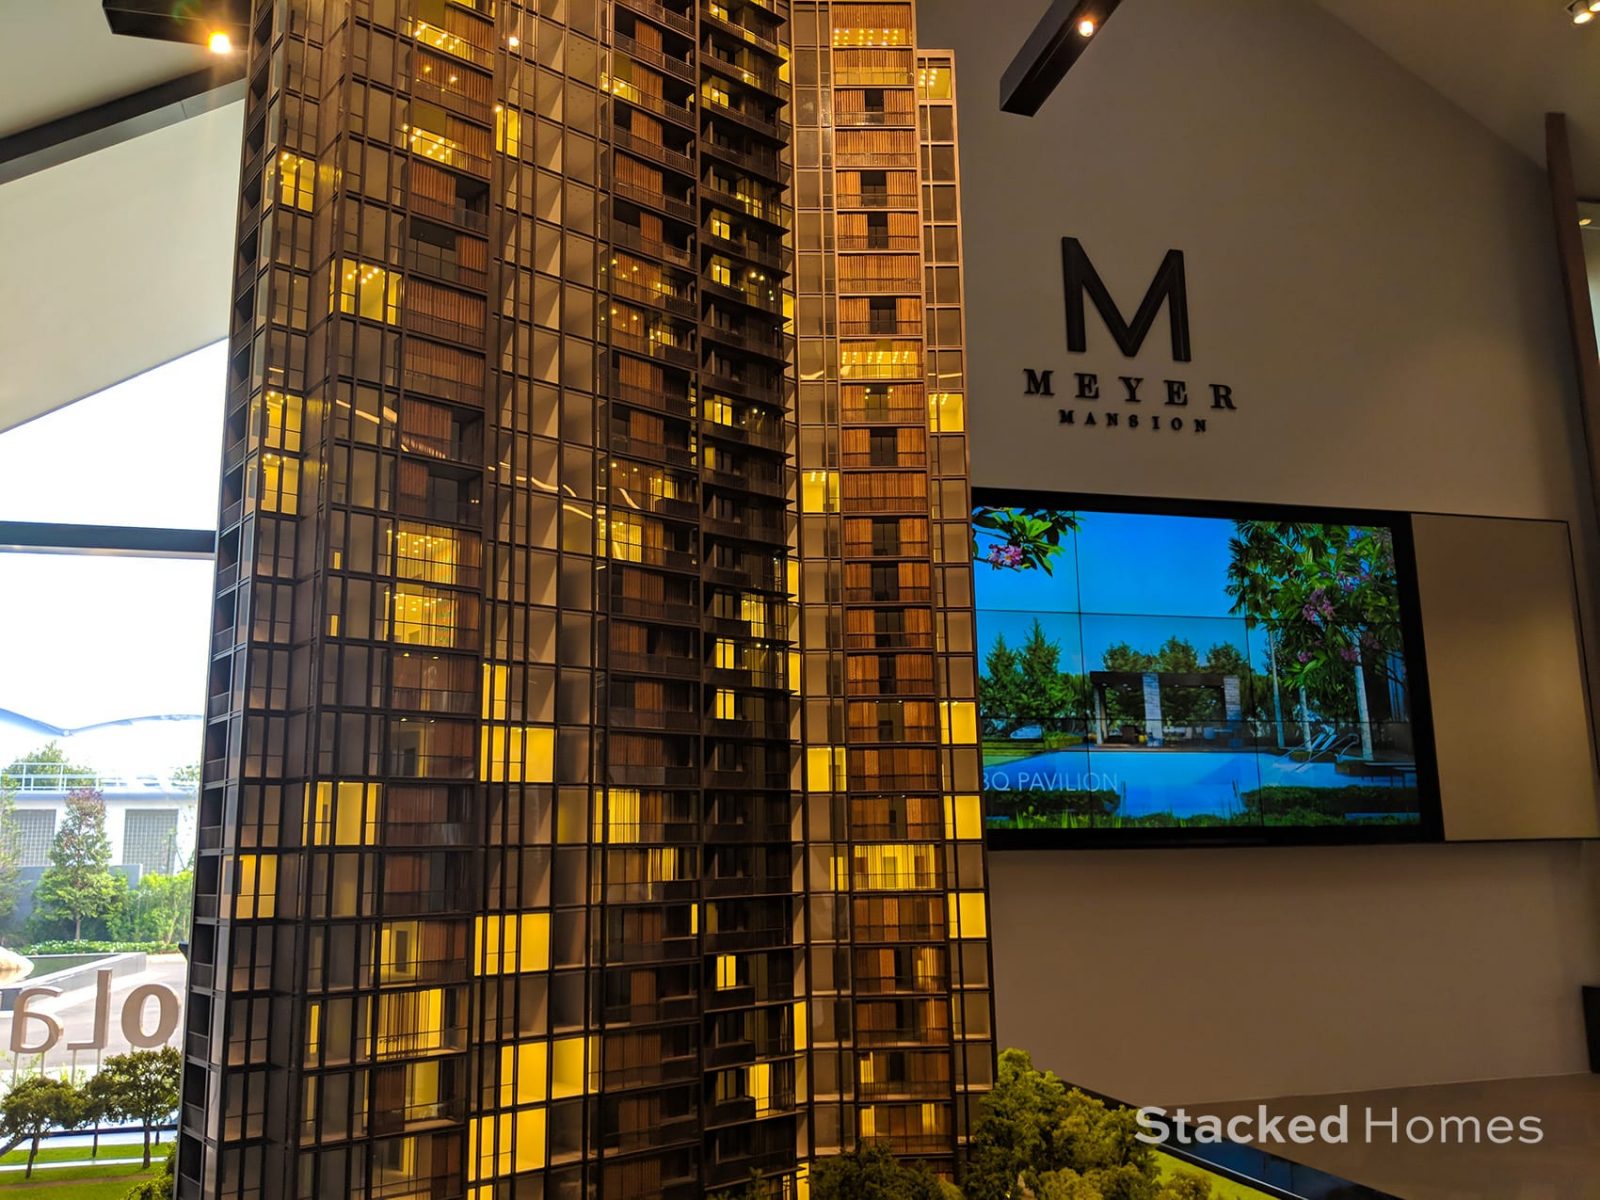 Meyer Mansion Condo Singapore